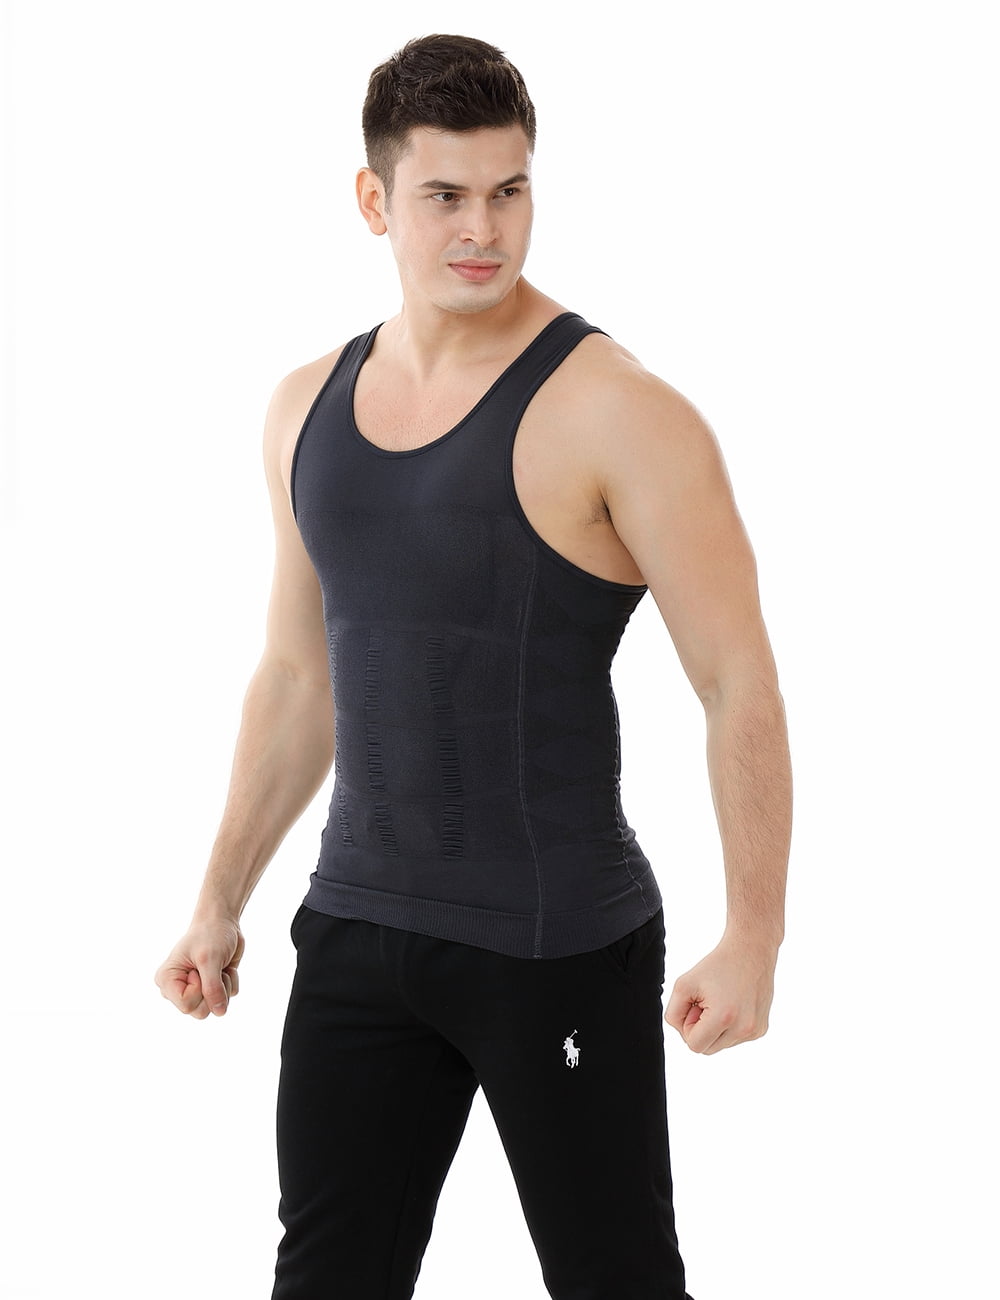 Kiewfjdk Men's Slimming Body Shaper Compression Shirt, Shapewear ...